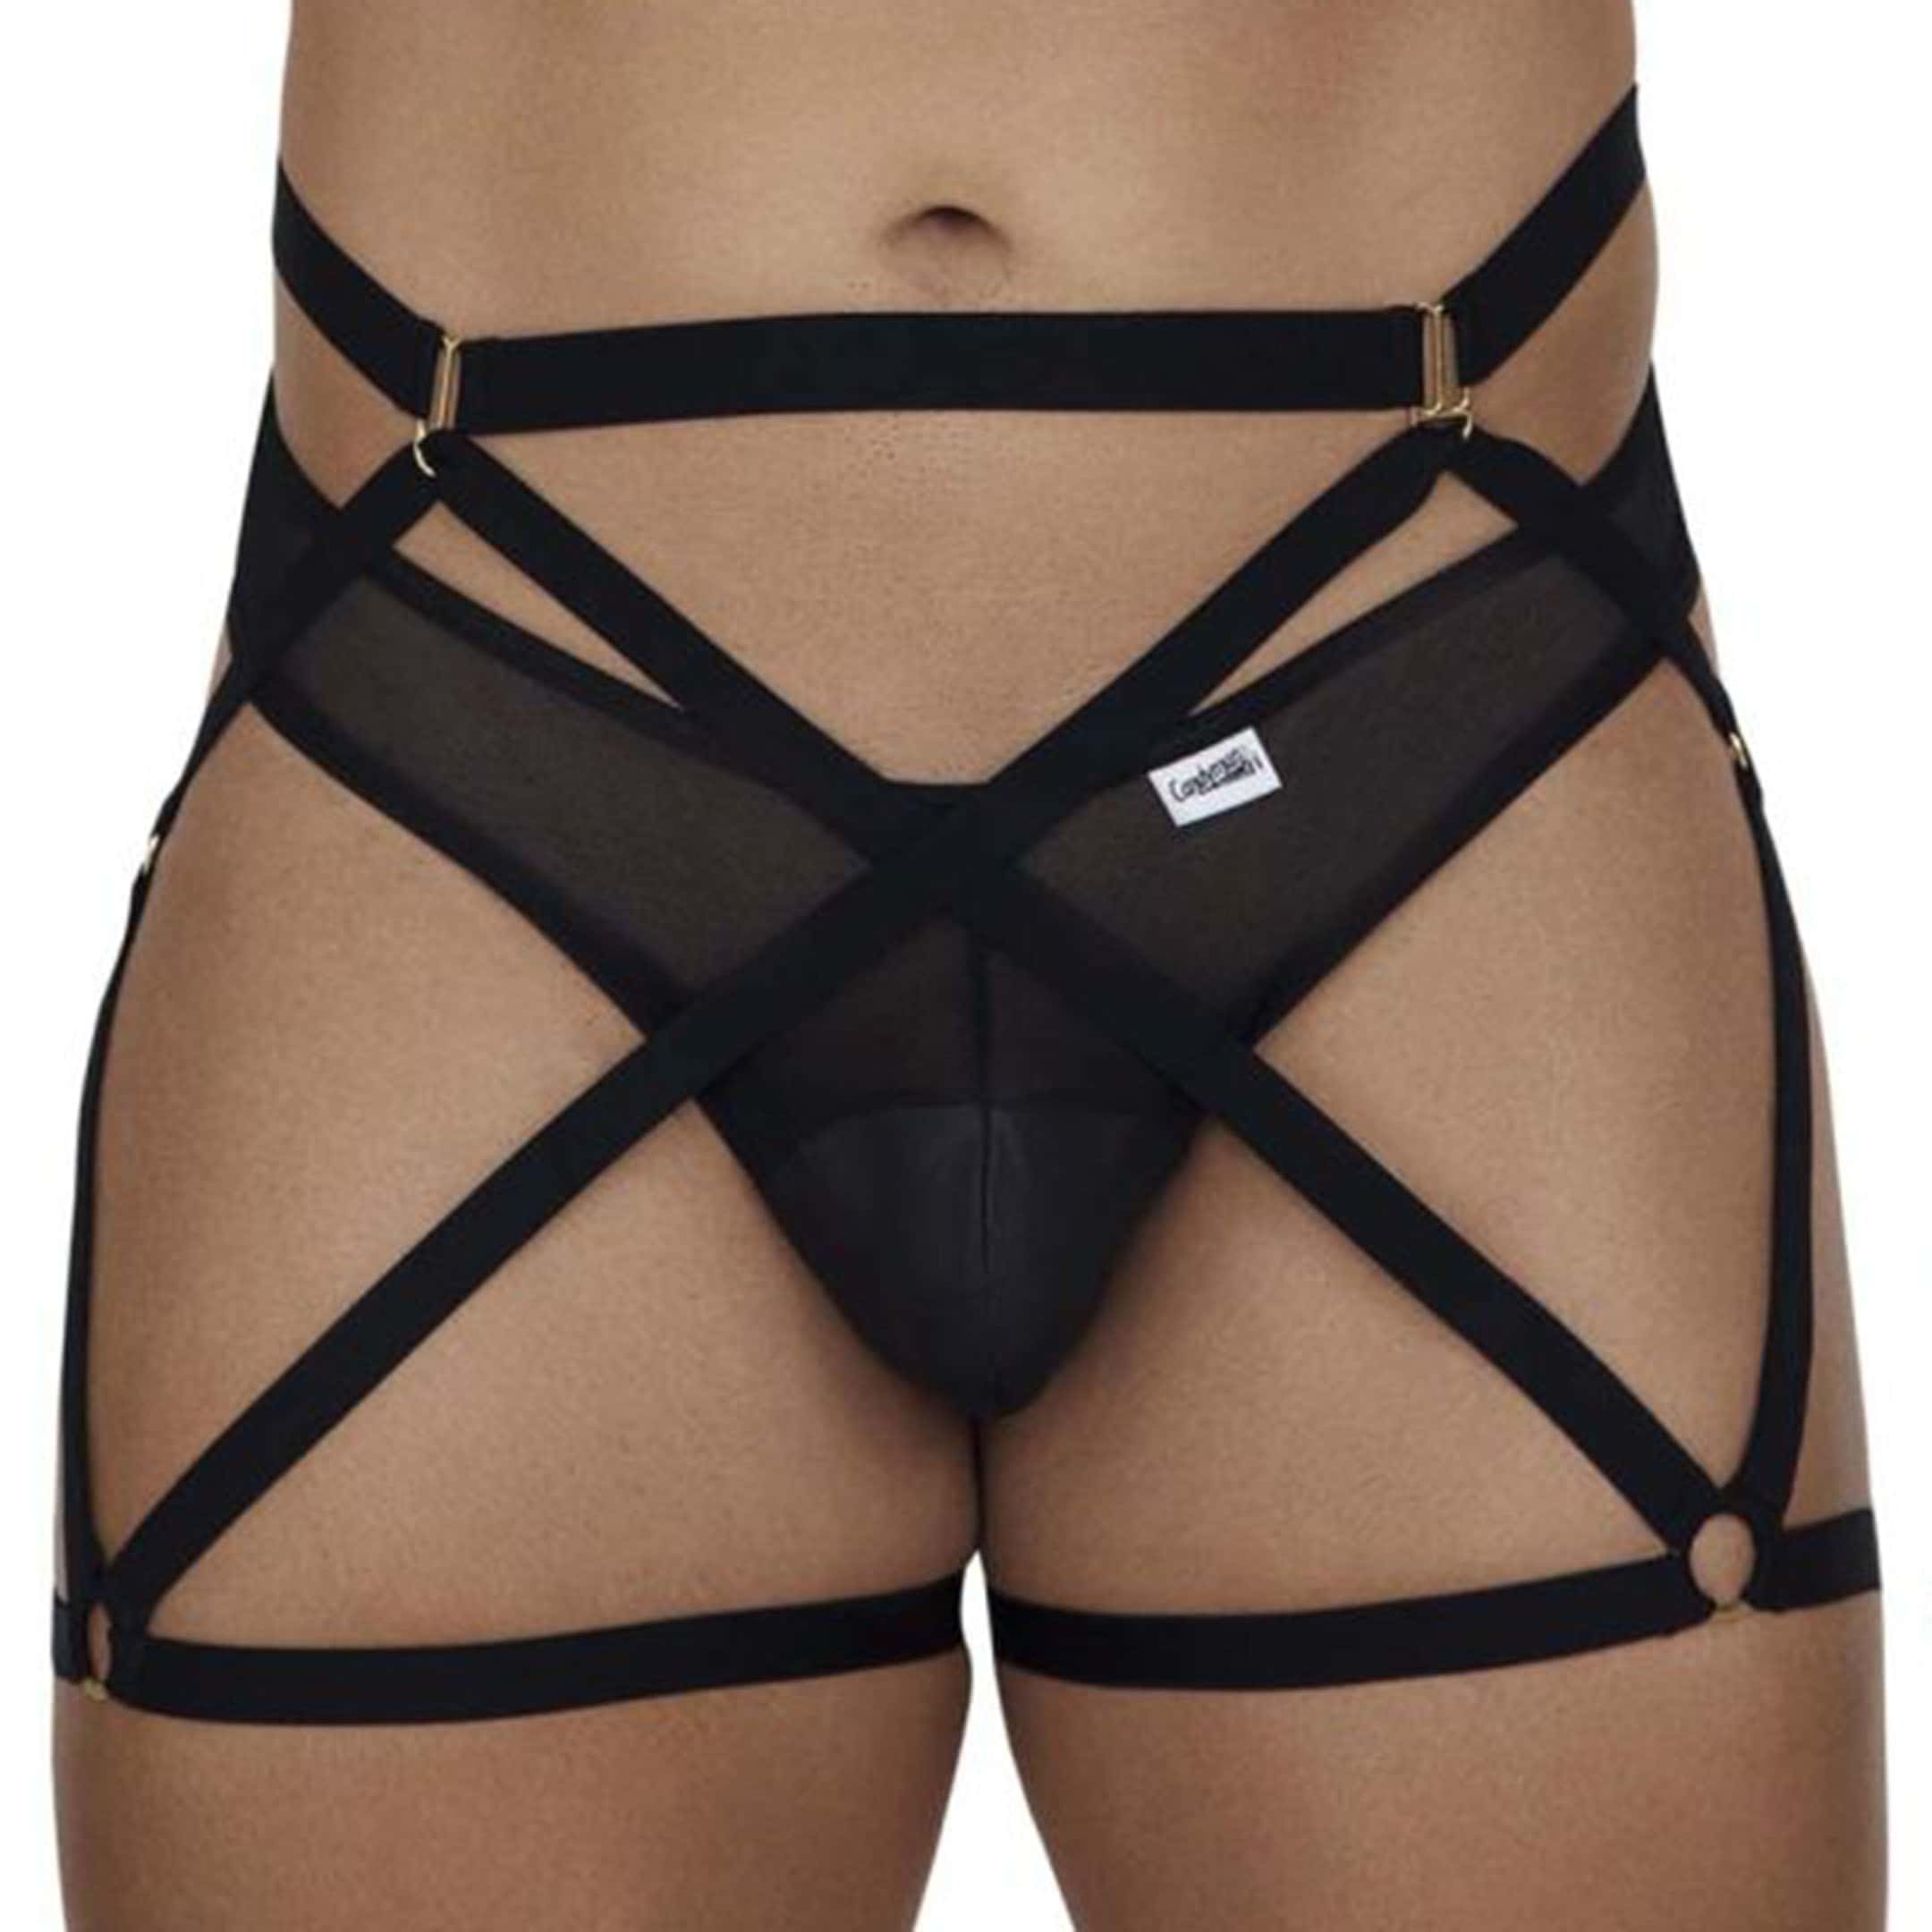 CandyMan Veil Garter – Thong Outfit – Black S/M